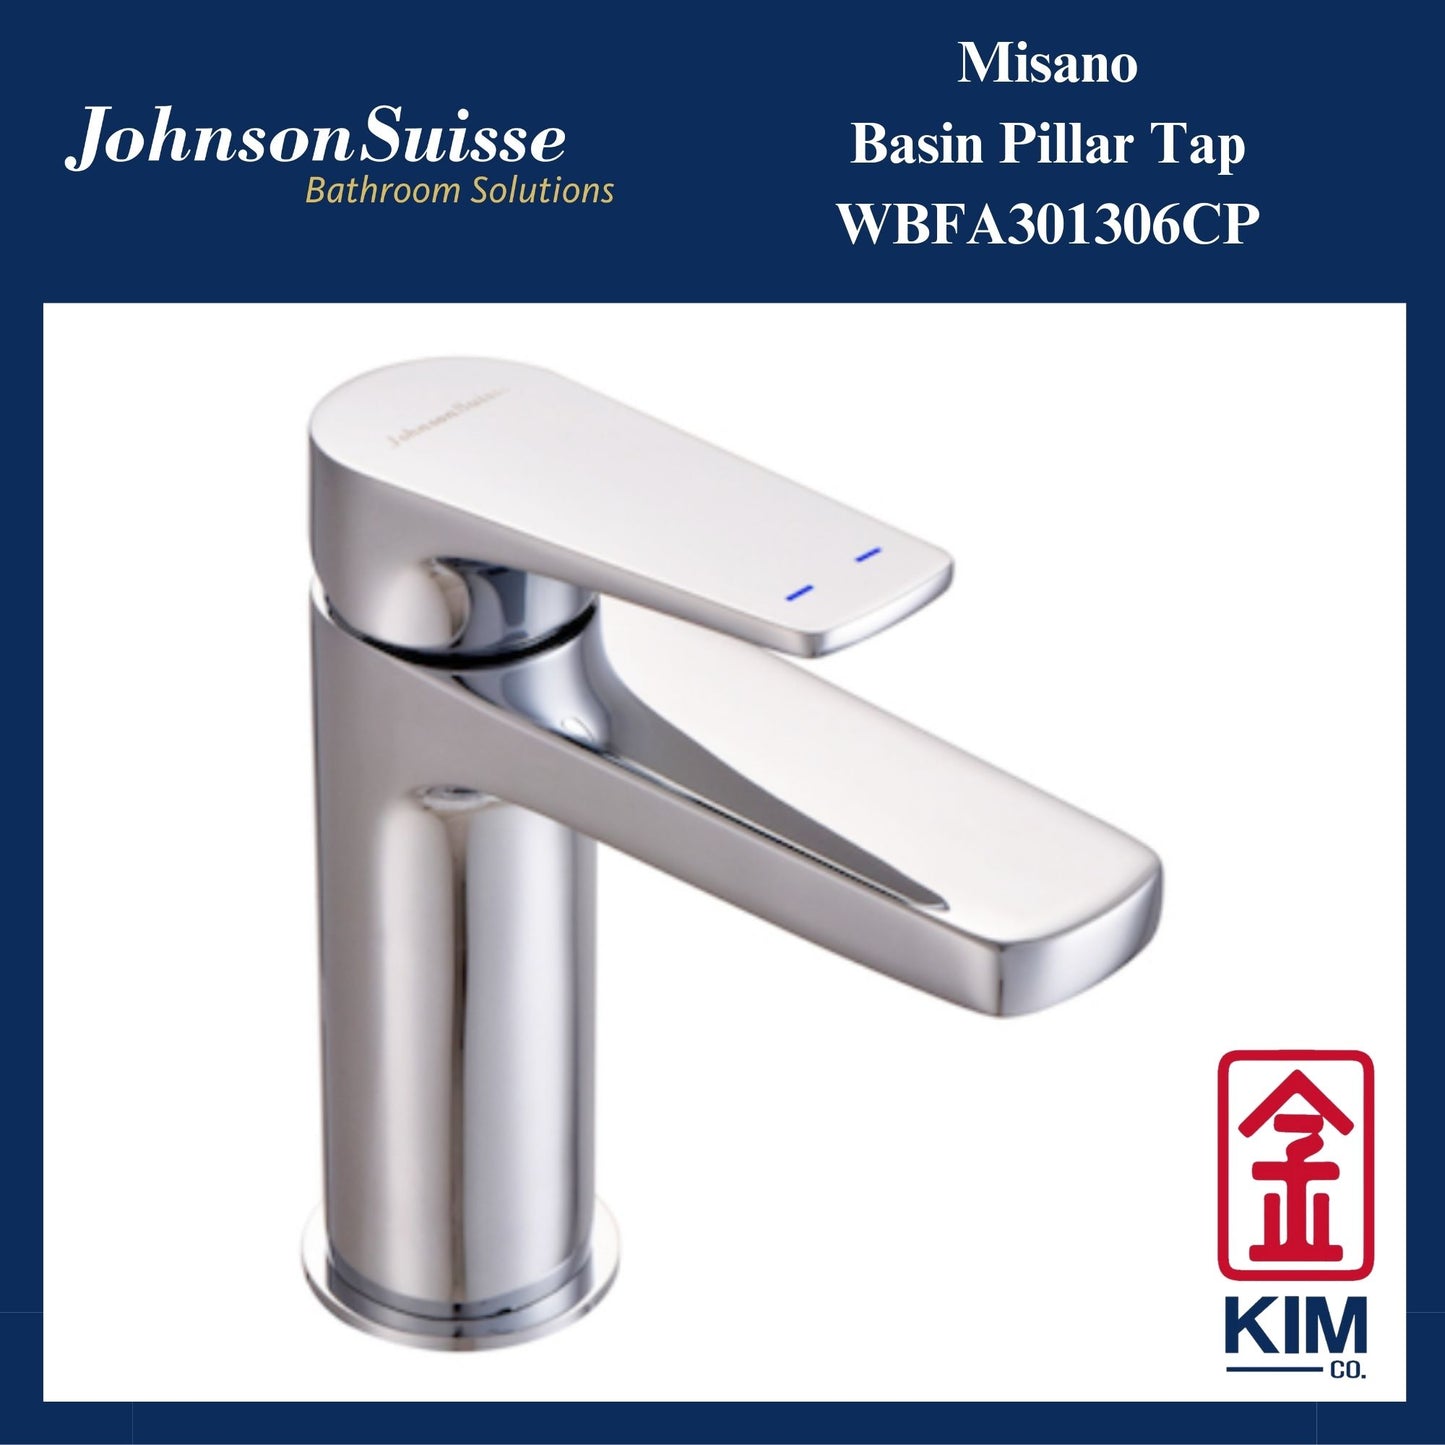 Johnson Suisse Misano Basin Pillar Tap (WBFA301306CP)